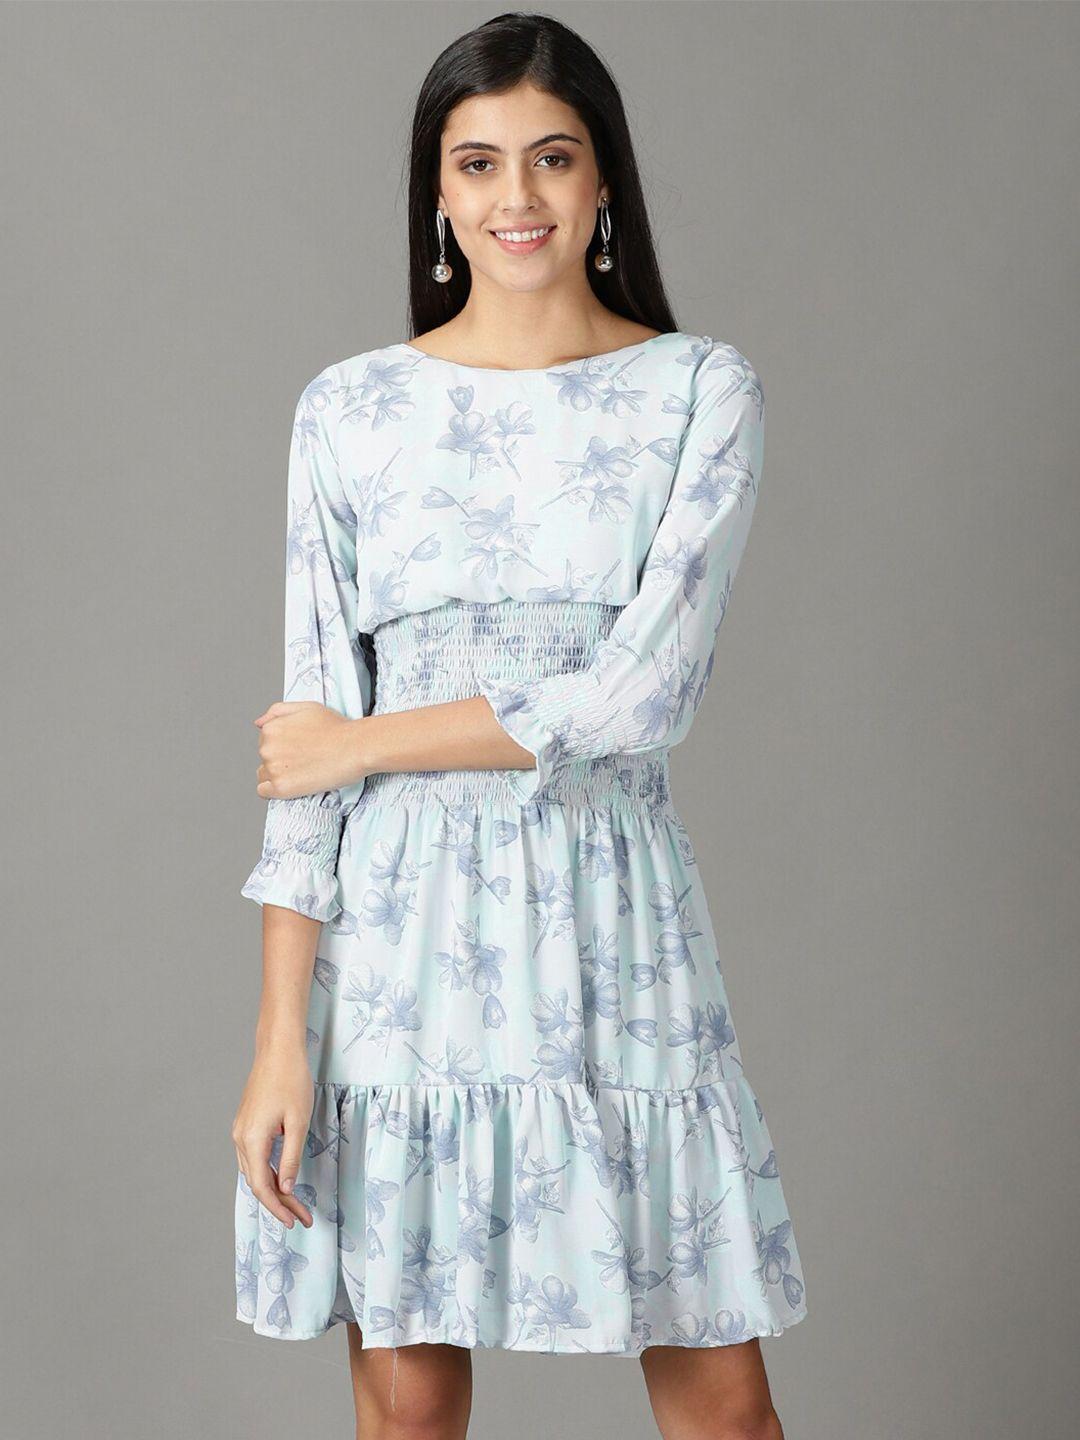 showoff-floral-printed-dress